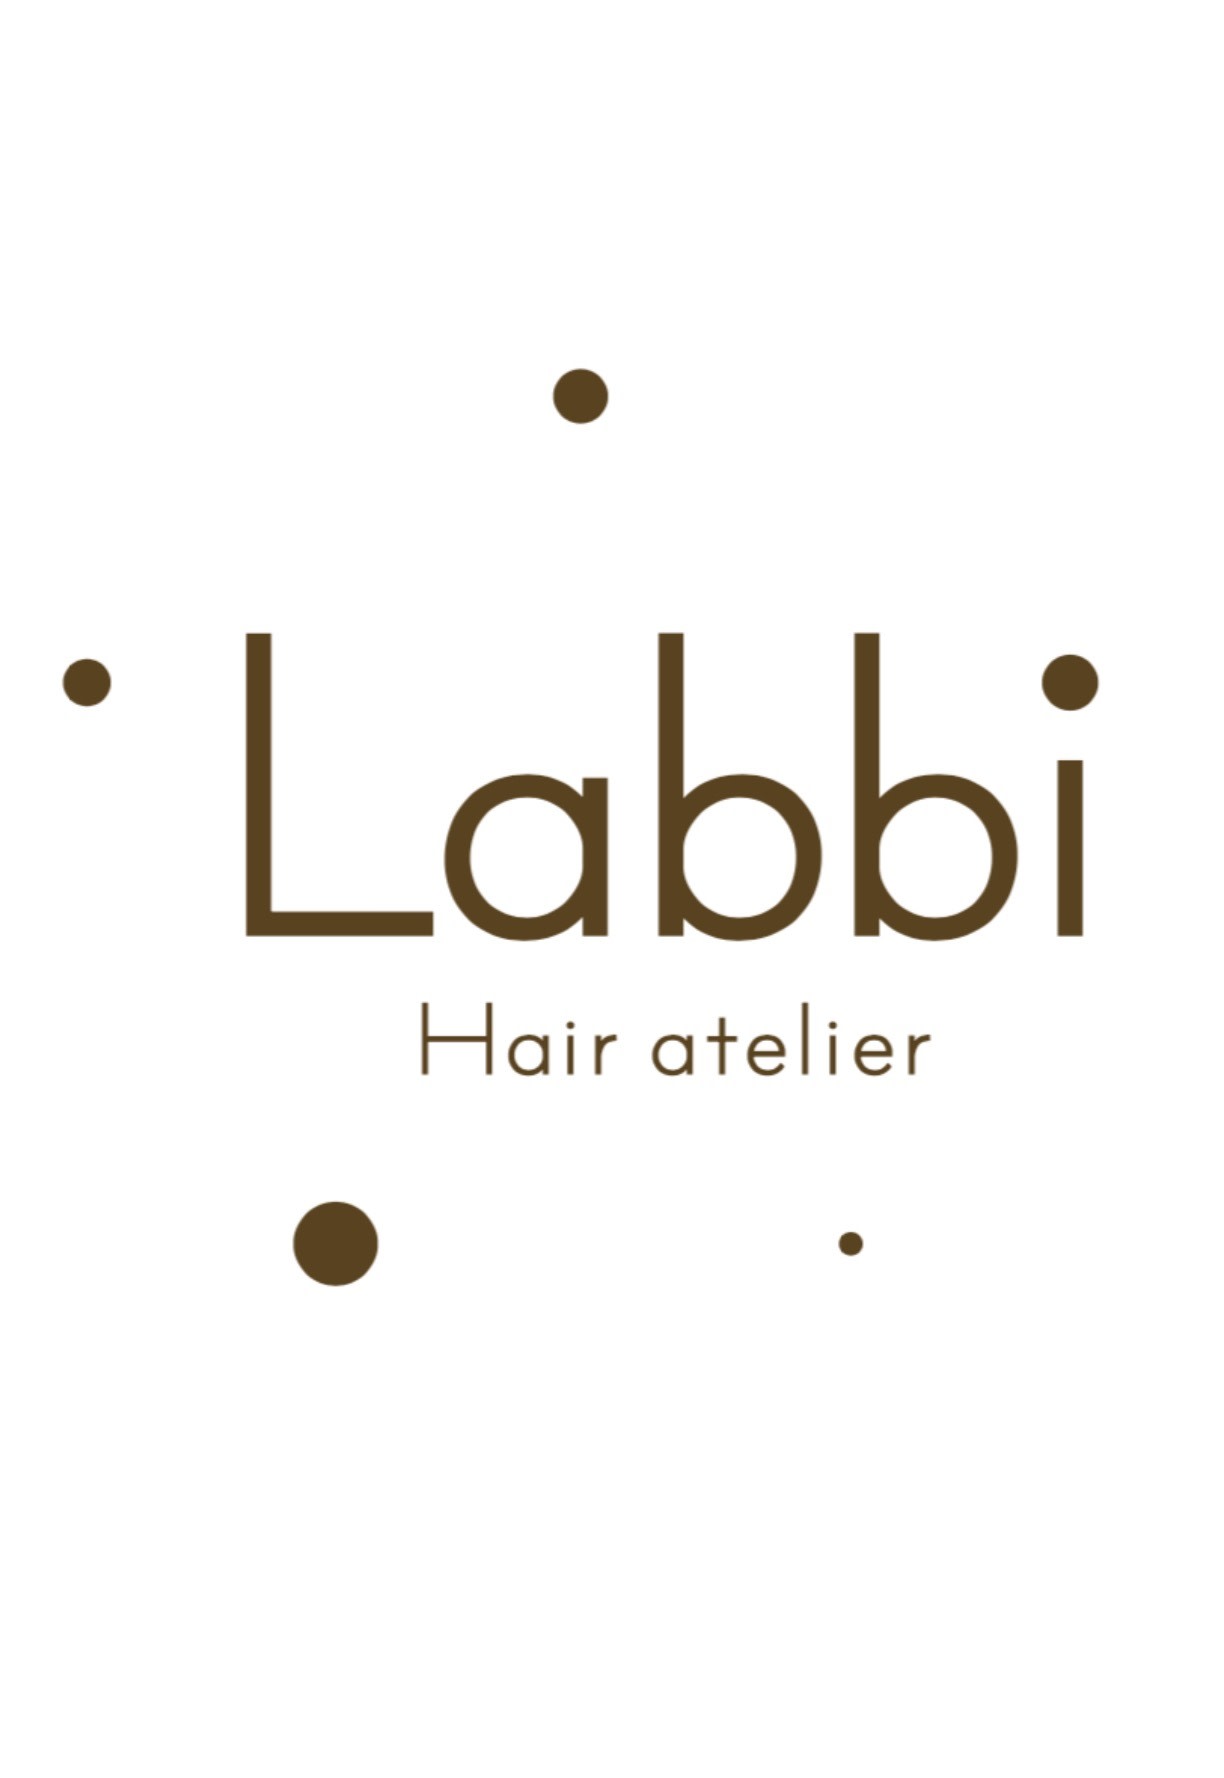 Labbi Hair atelier【ラビ ヘア アトリエ】のスタイル紹介。【Labbi Hair atelier】Style5